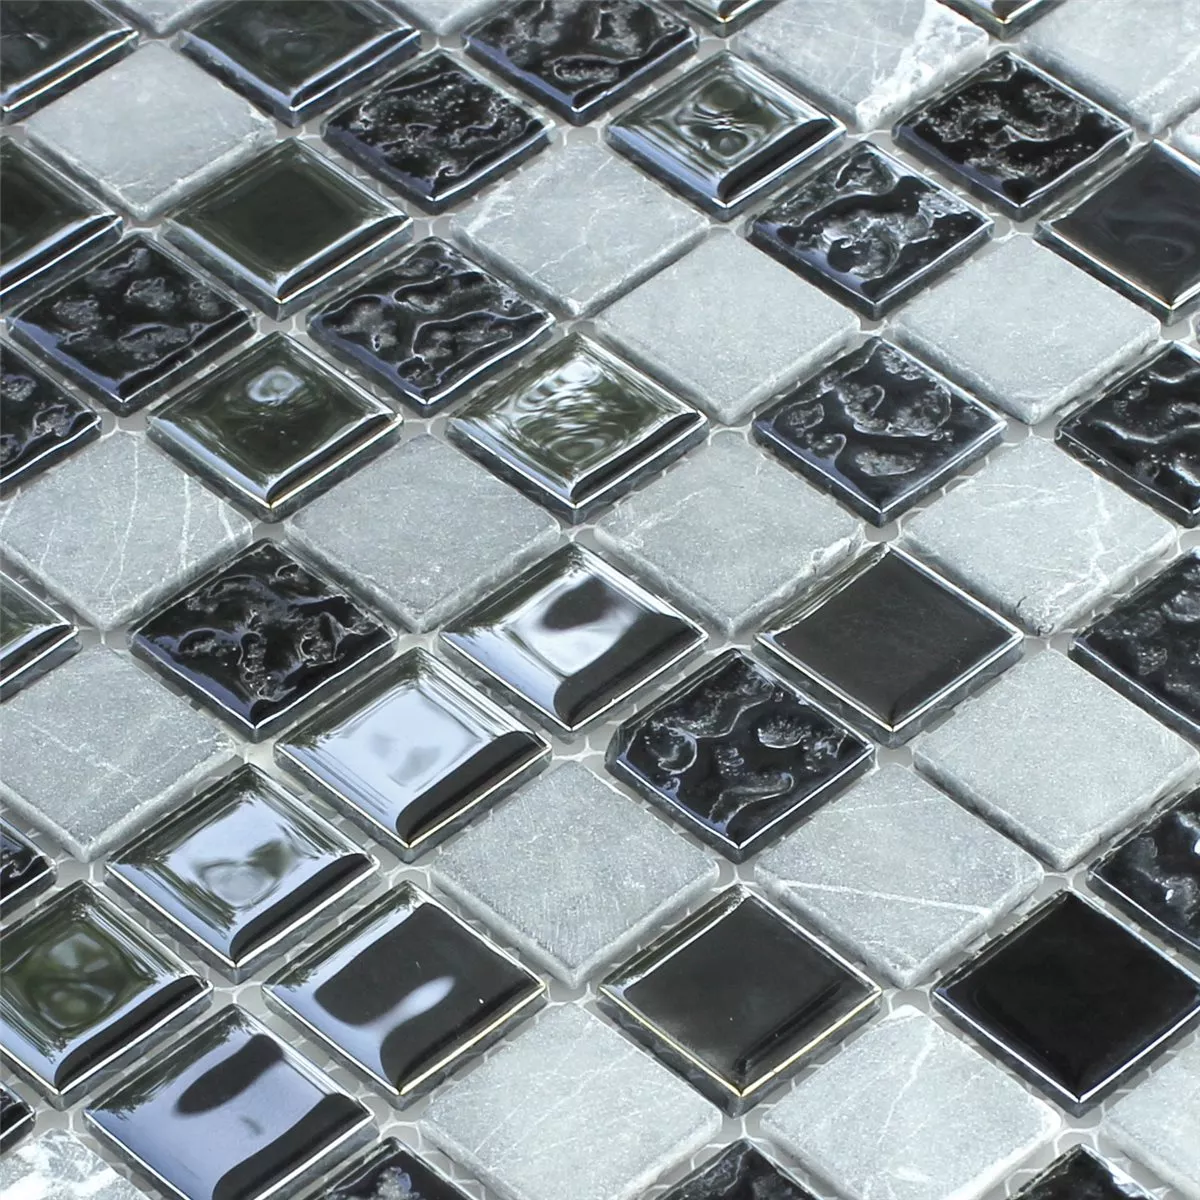 Sample Mosaic Tiles Glass Marble Black Grey